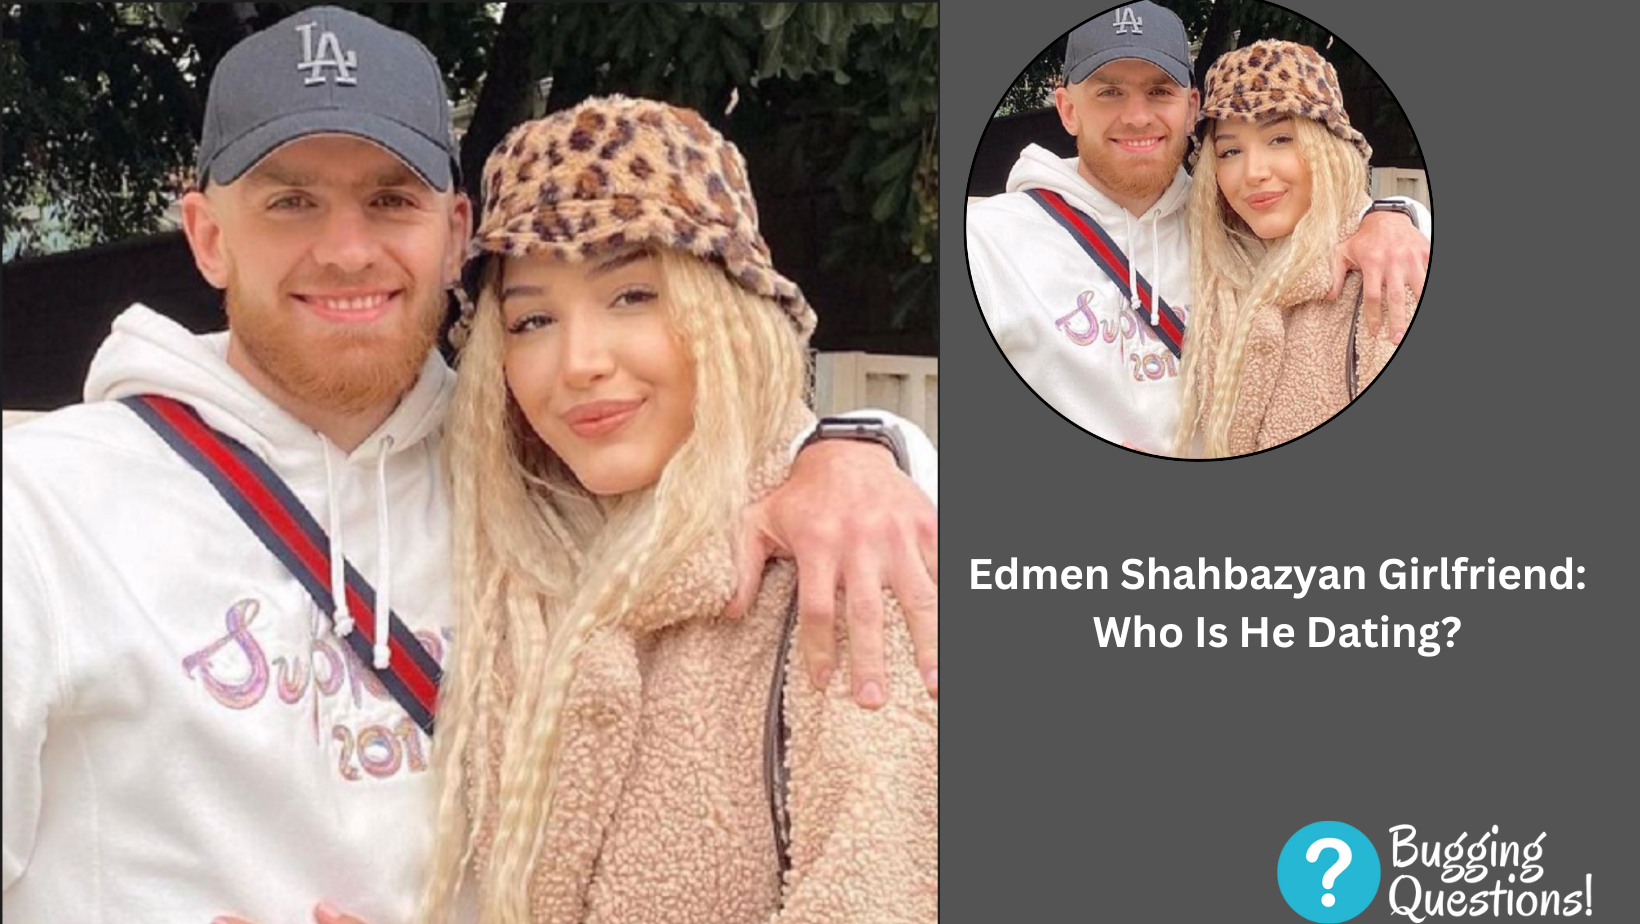 Edmen Shahbazyan Girlfriend: Who Is He Dating?